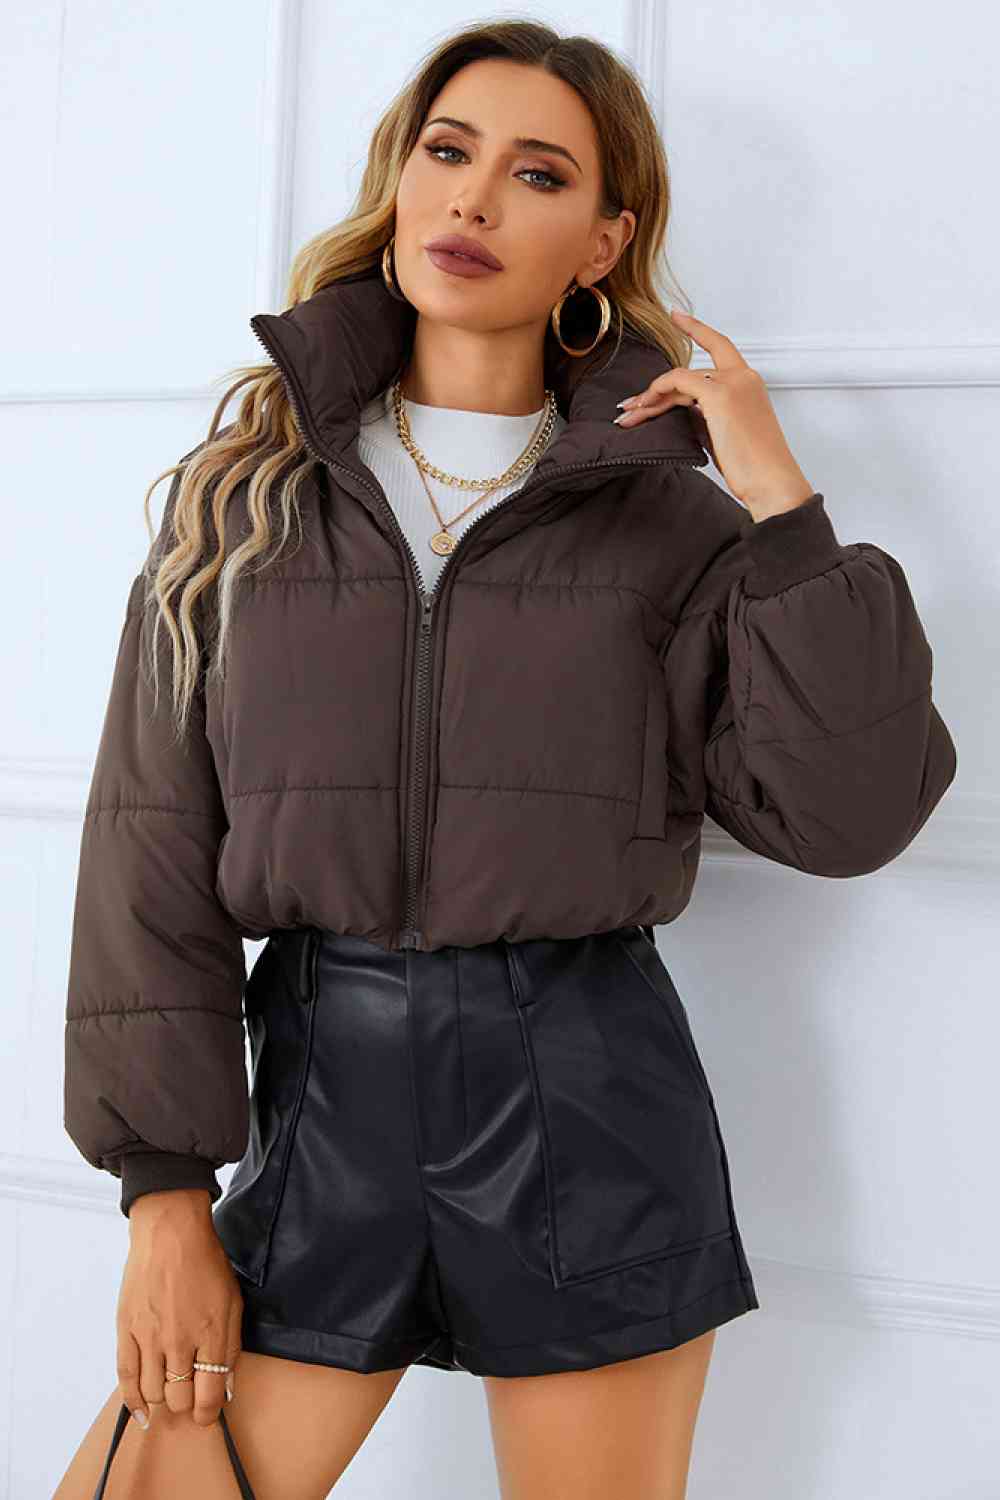 Zip-Up Winter Coat with Pockets  Hot Trends